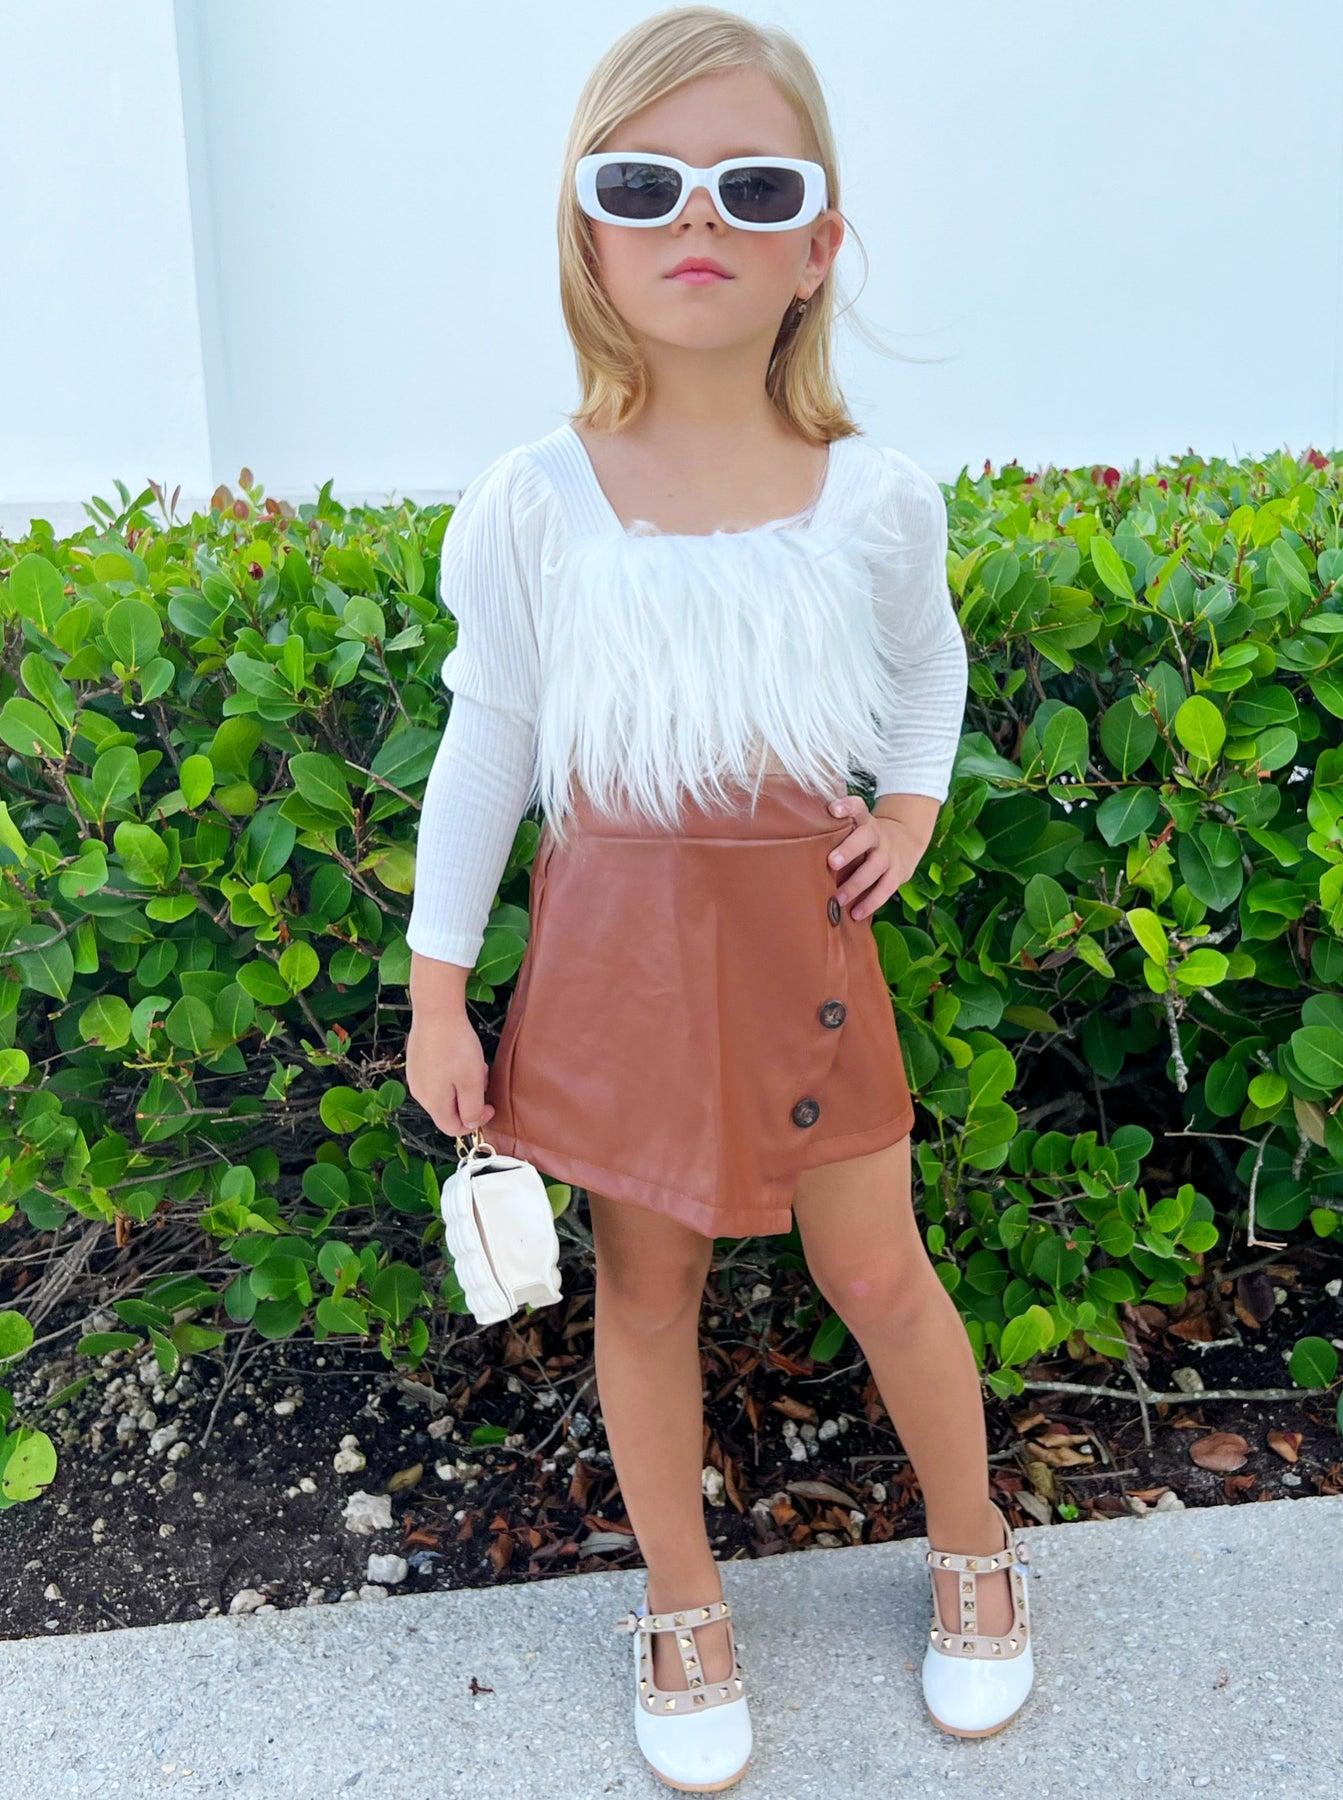 Toddler Everyday Fashion | Girls Furry Crop Top PU Leather Skort Set ...